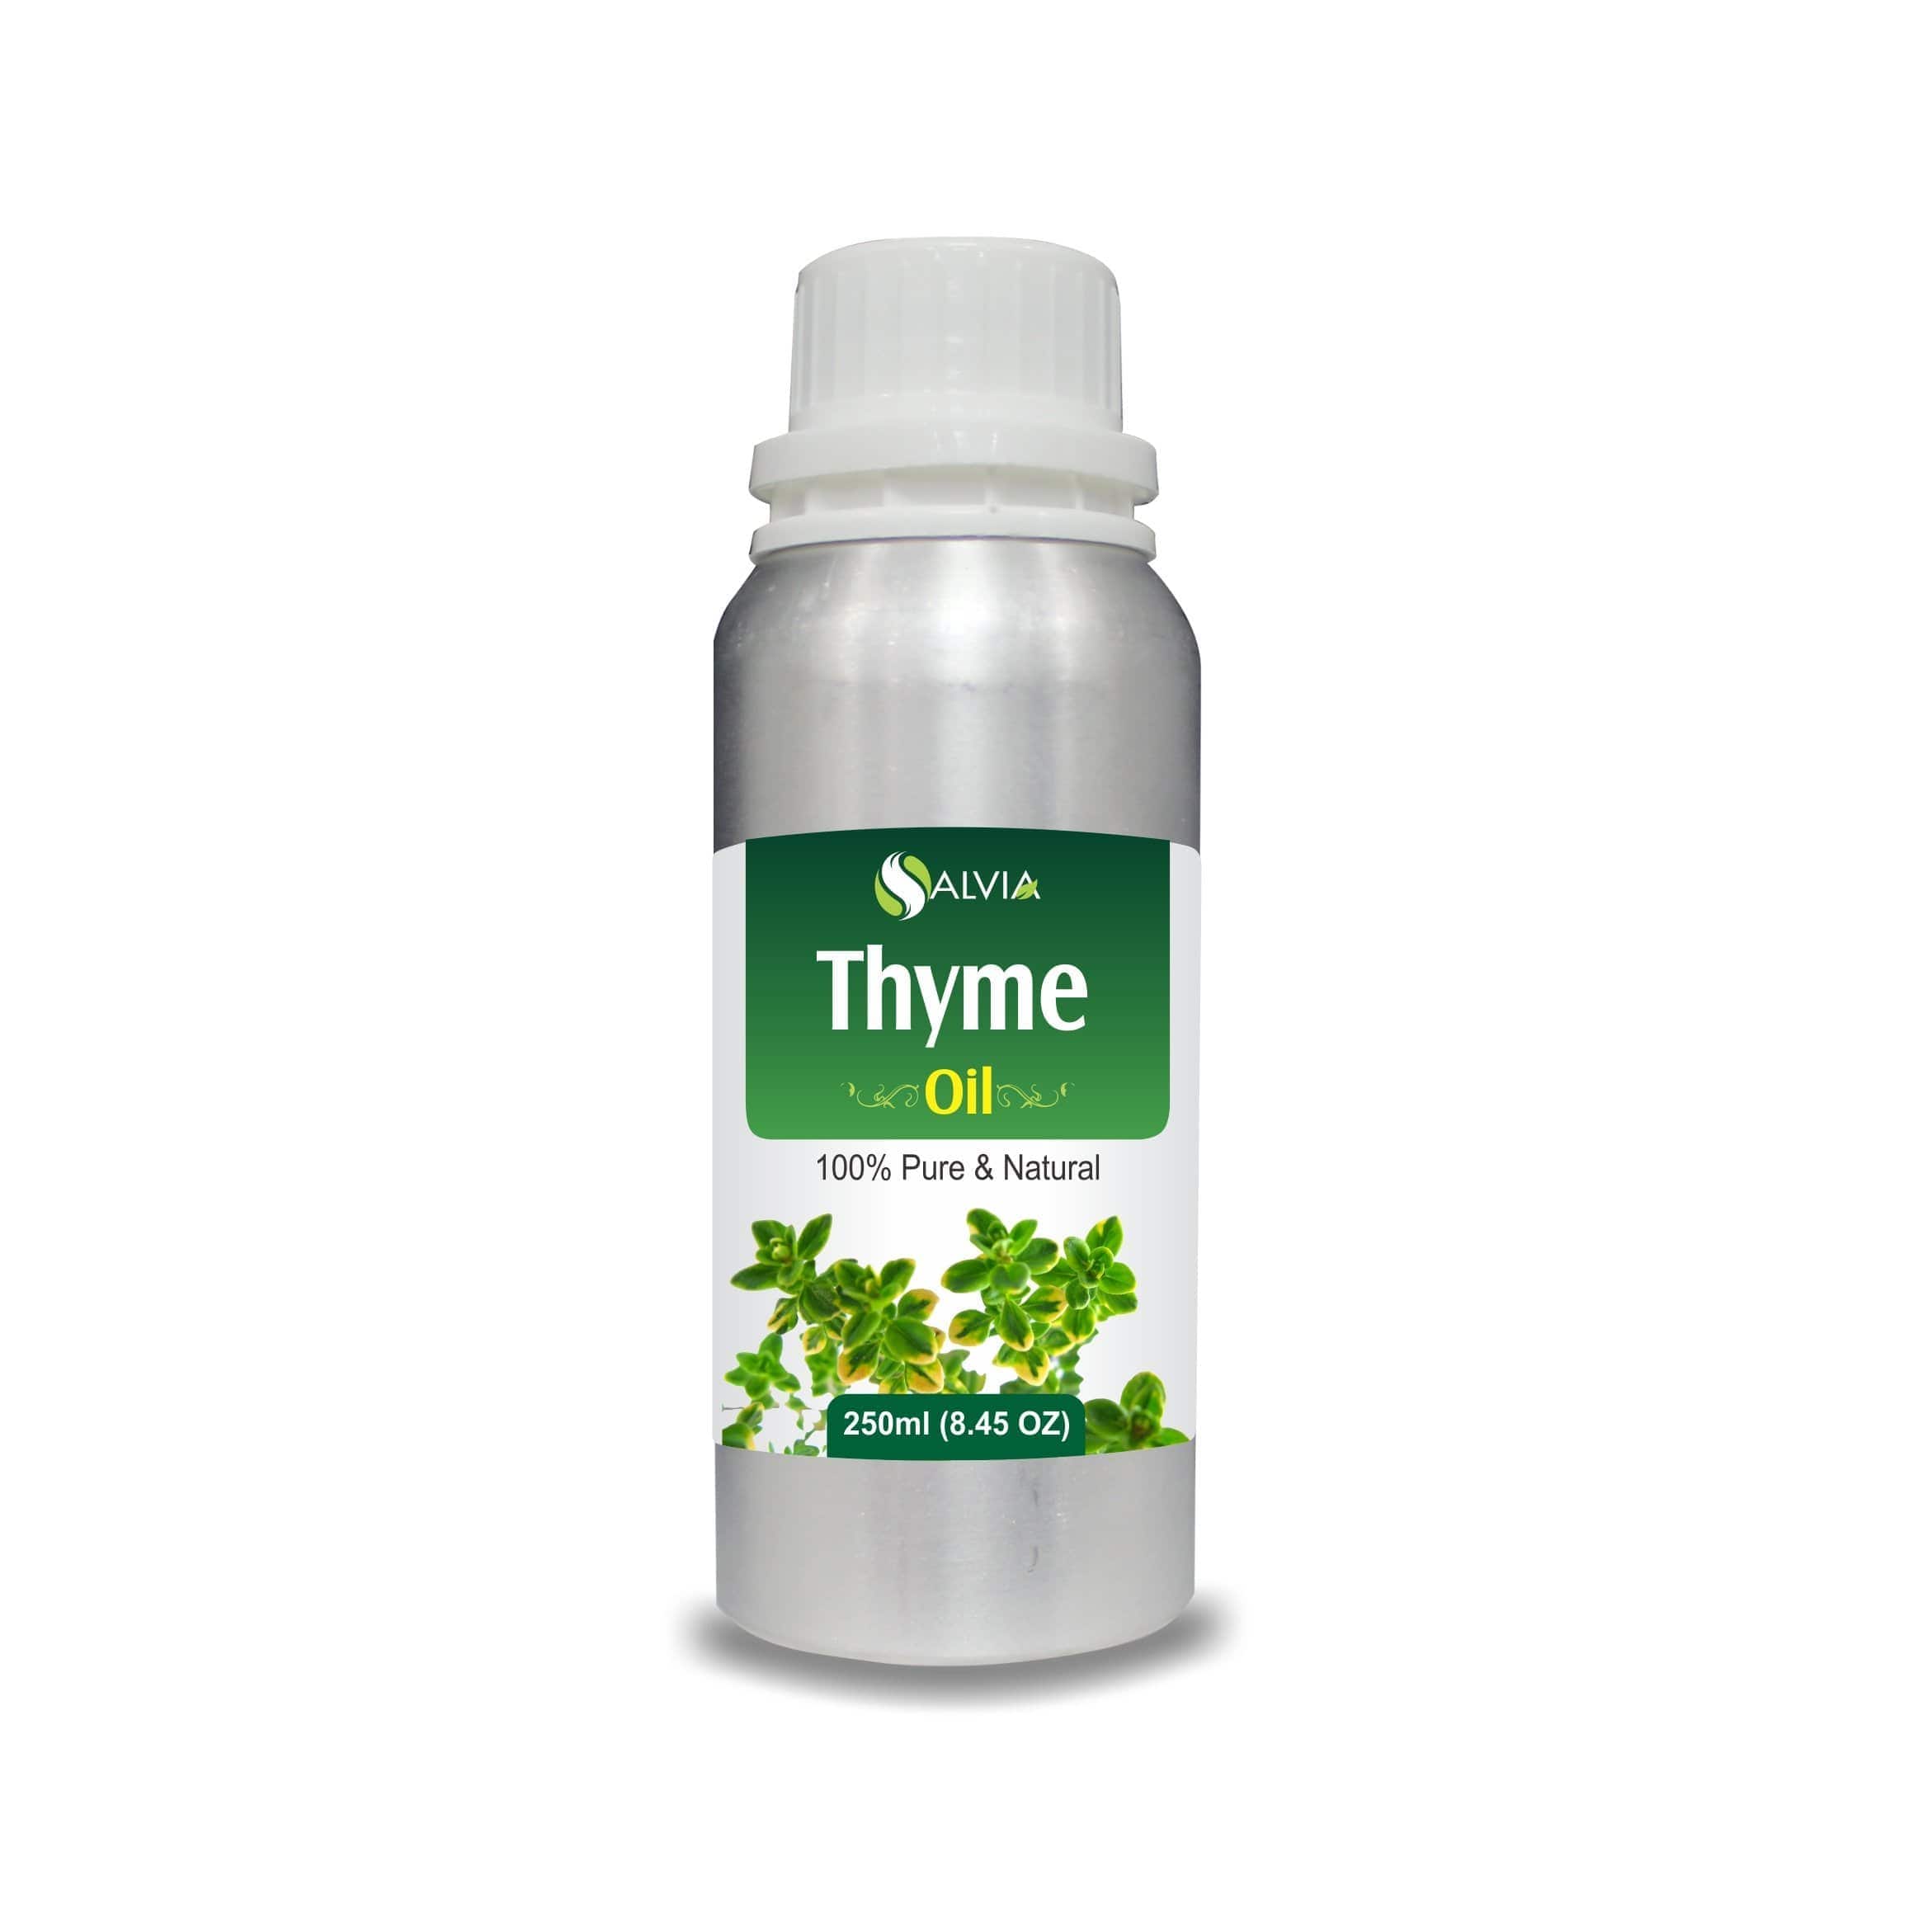 thyme oil for hair